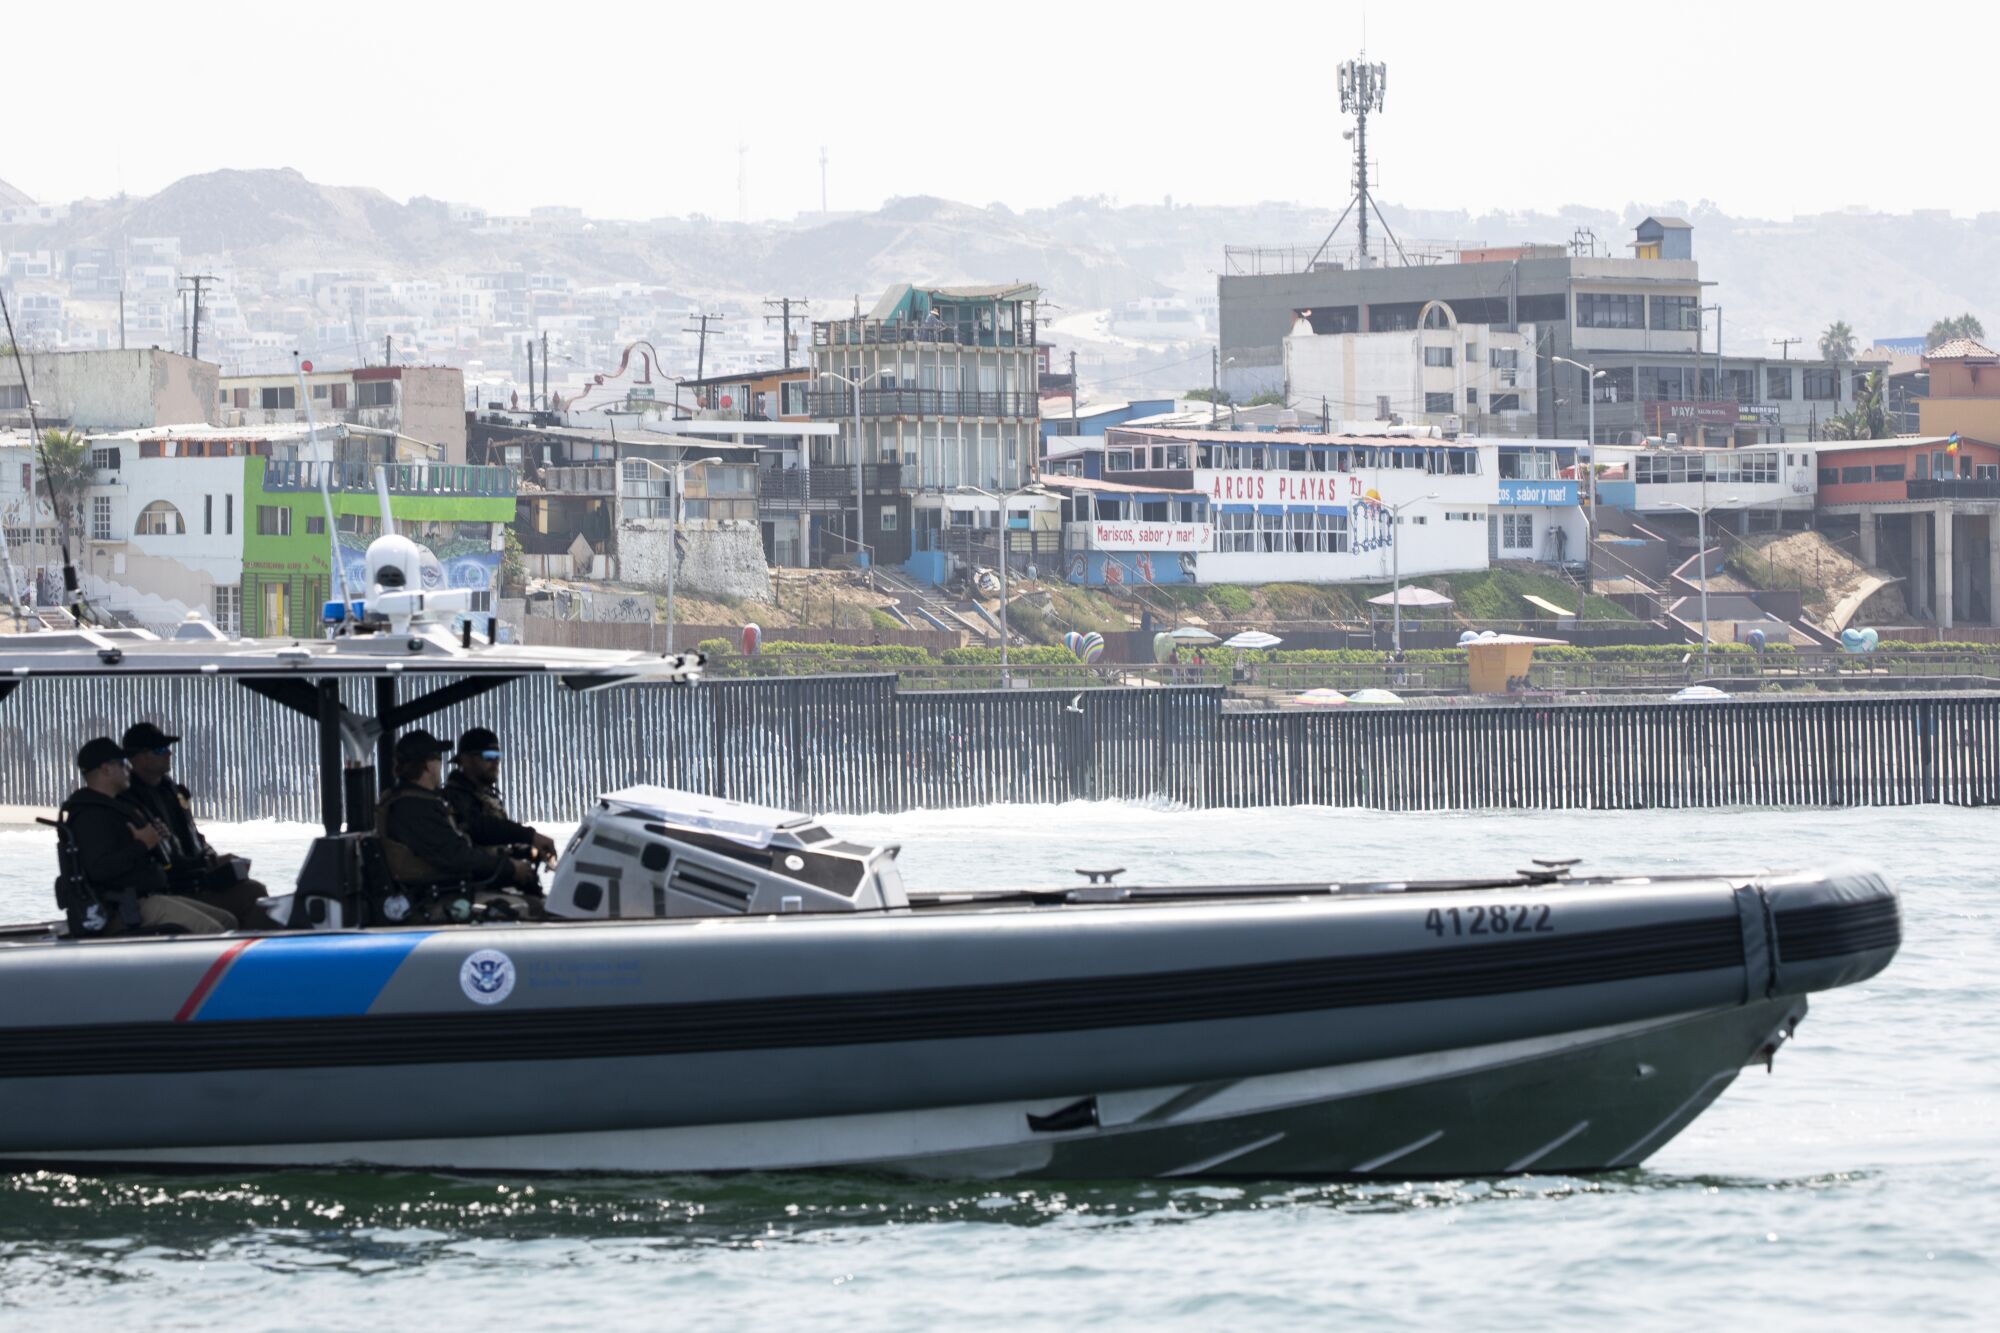 Marine interdiction agents patrol in a boat off the coast.